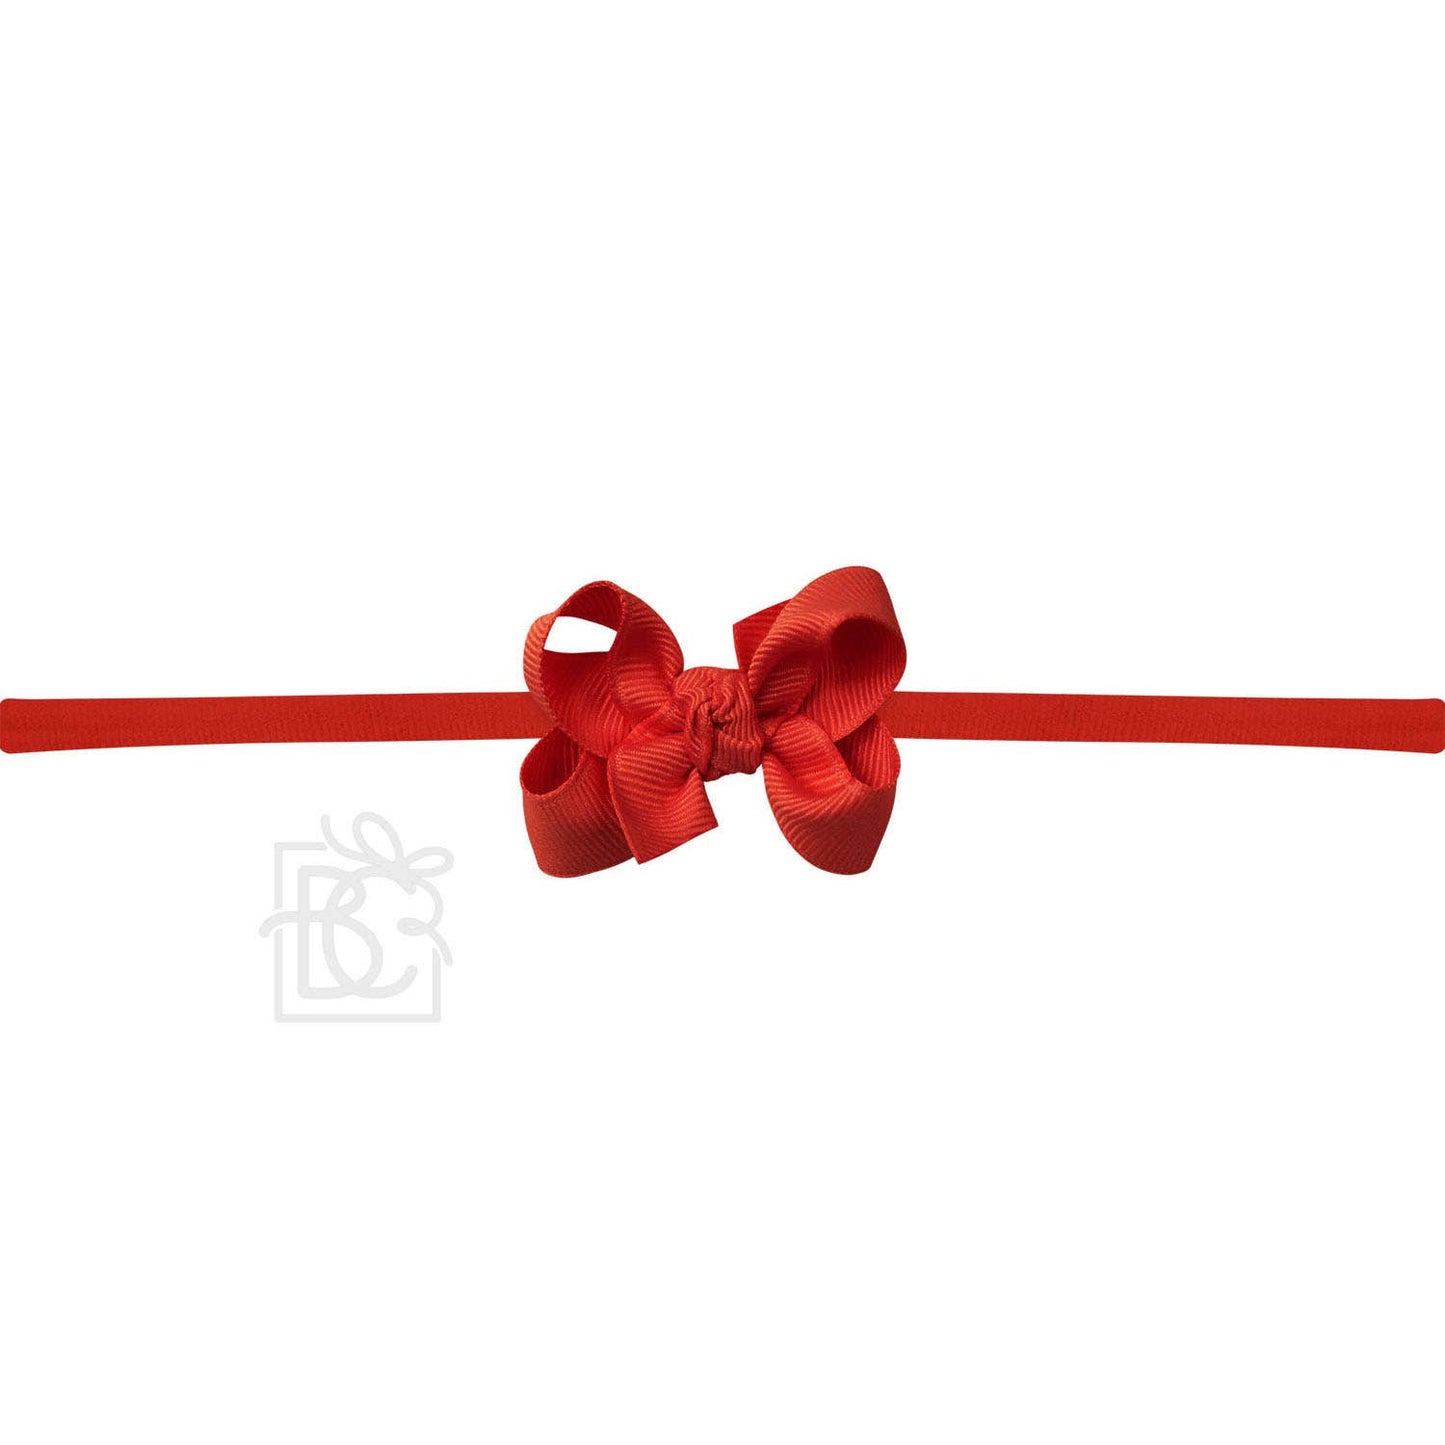 Pantyhose headband Bow- Red